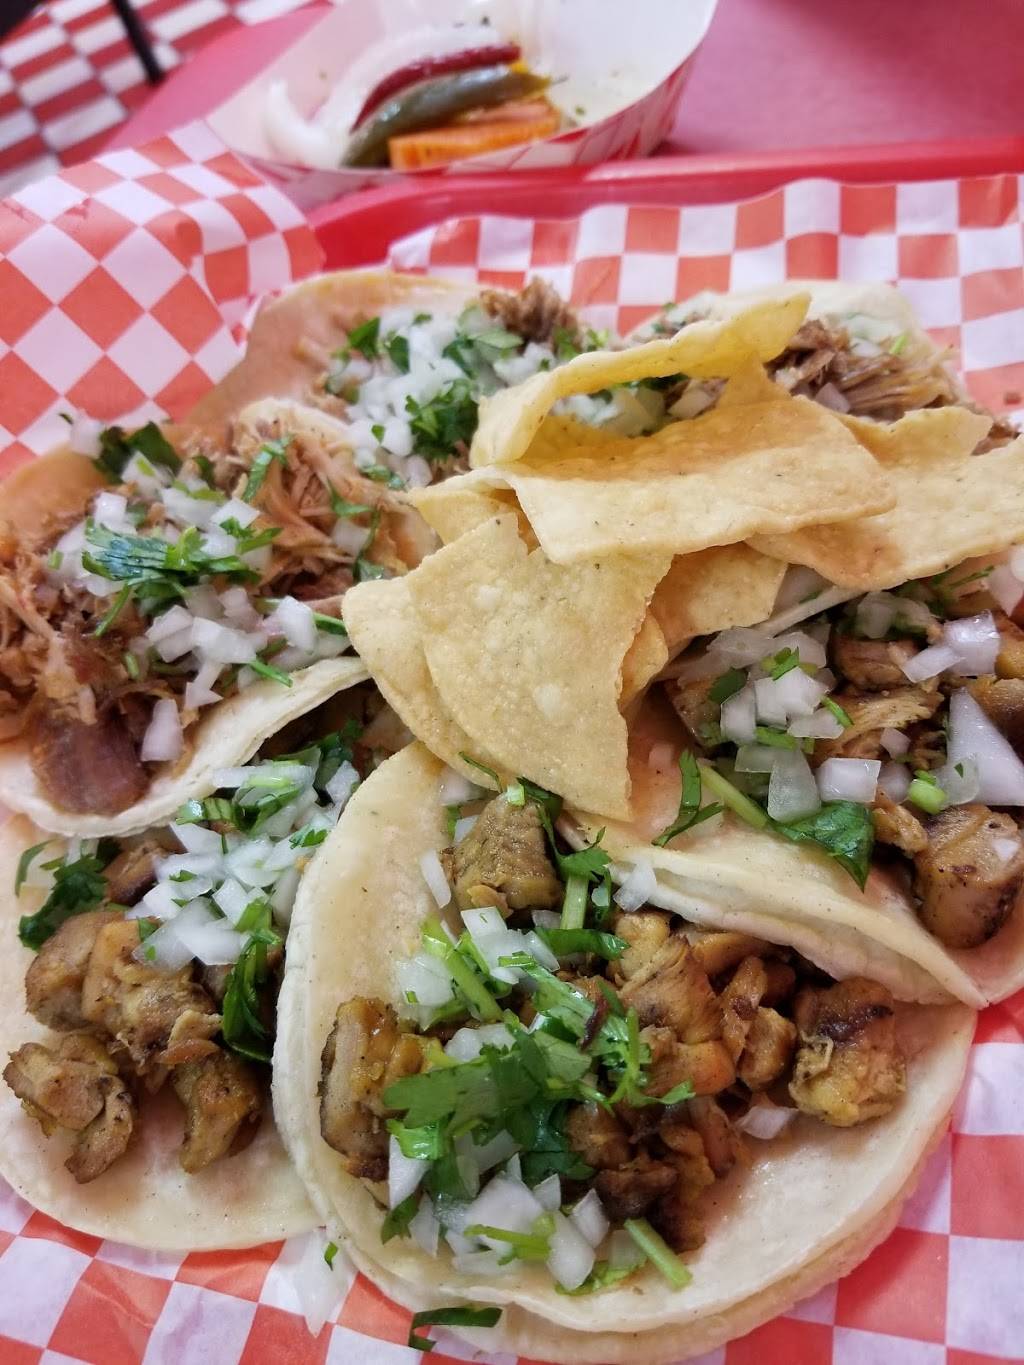 Tacos Mexico | restaurant | 1133 S Hacienda Blvd, Hacienda Heights, CA 91745, USA | 6263331551 OR +1 626-333-1551